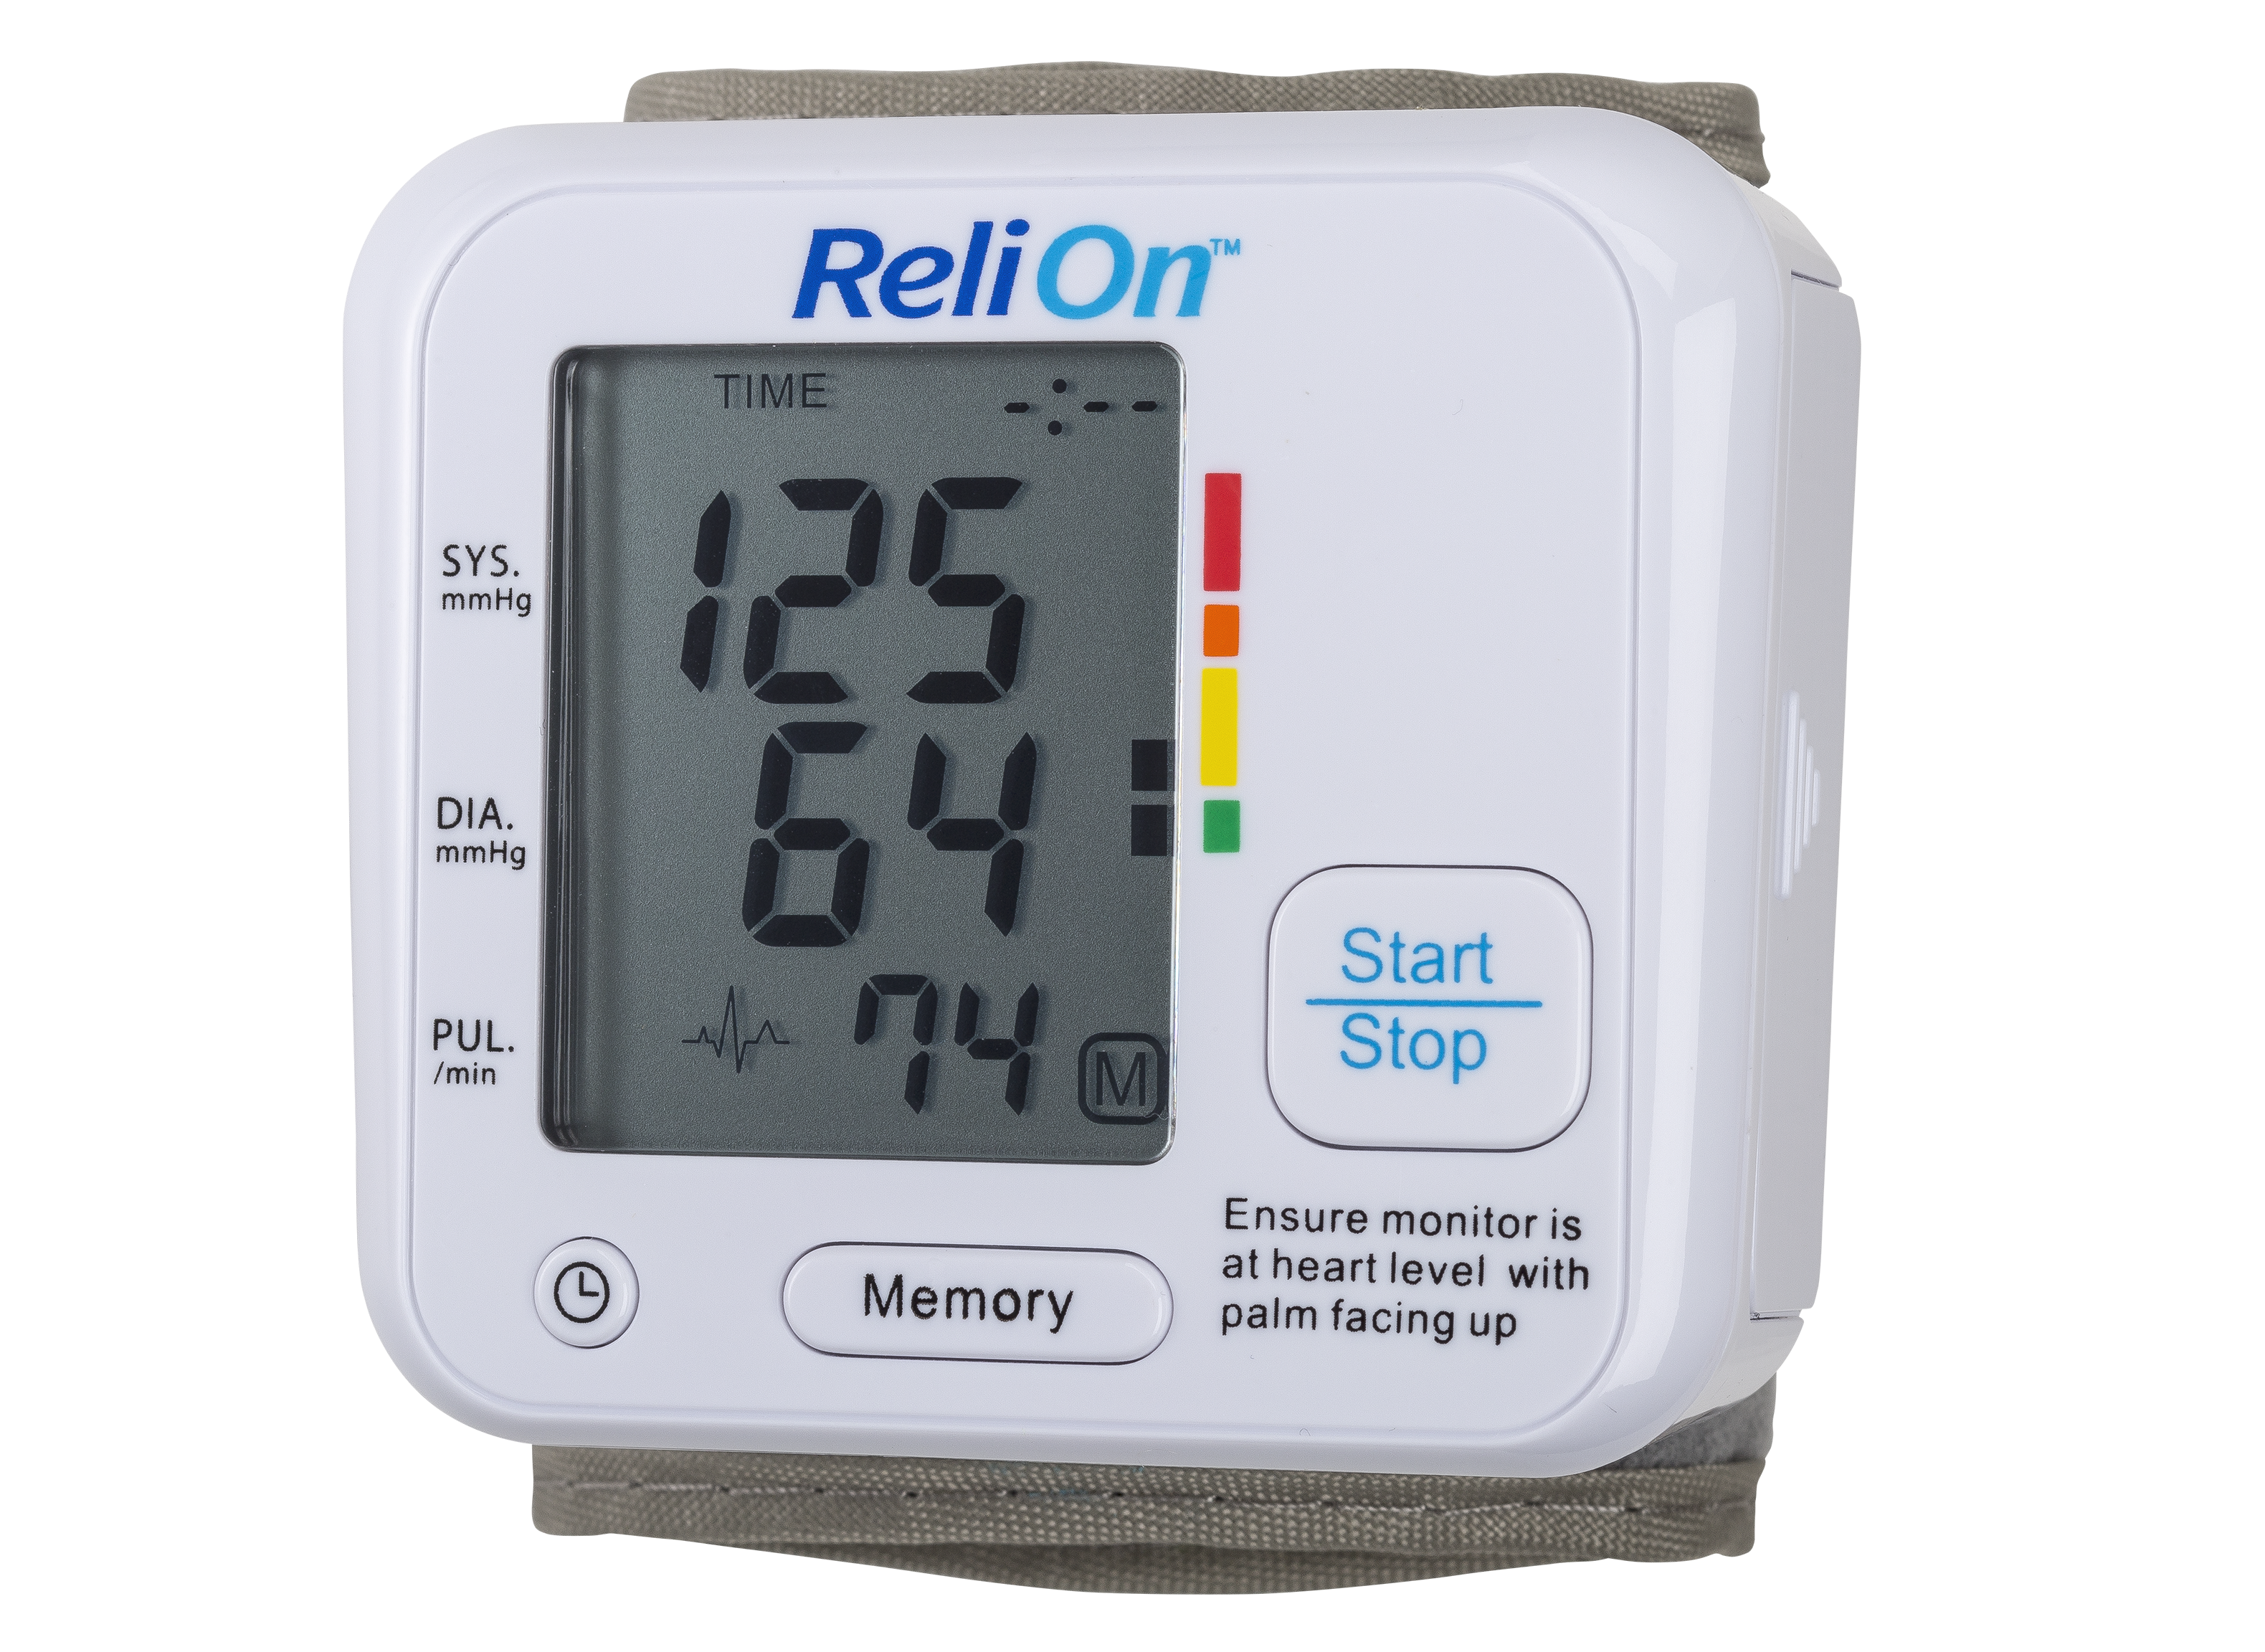 ReliOn (Wal-Mart) BP200 HEM741CRELN4 Blood Pressure Monitor Review